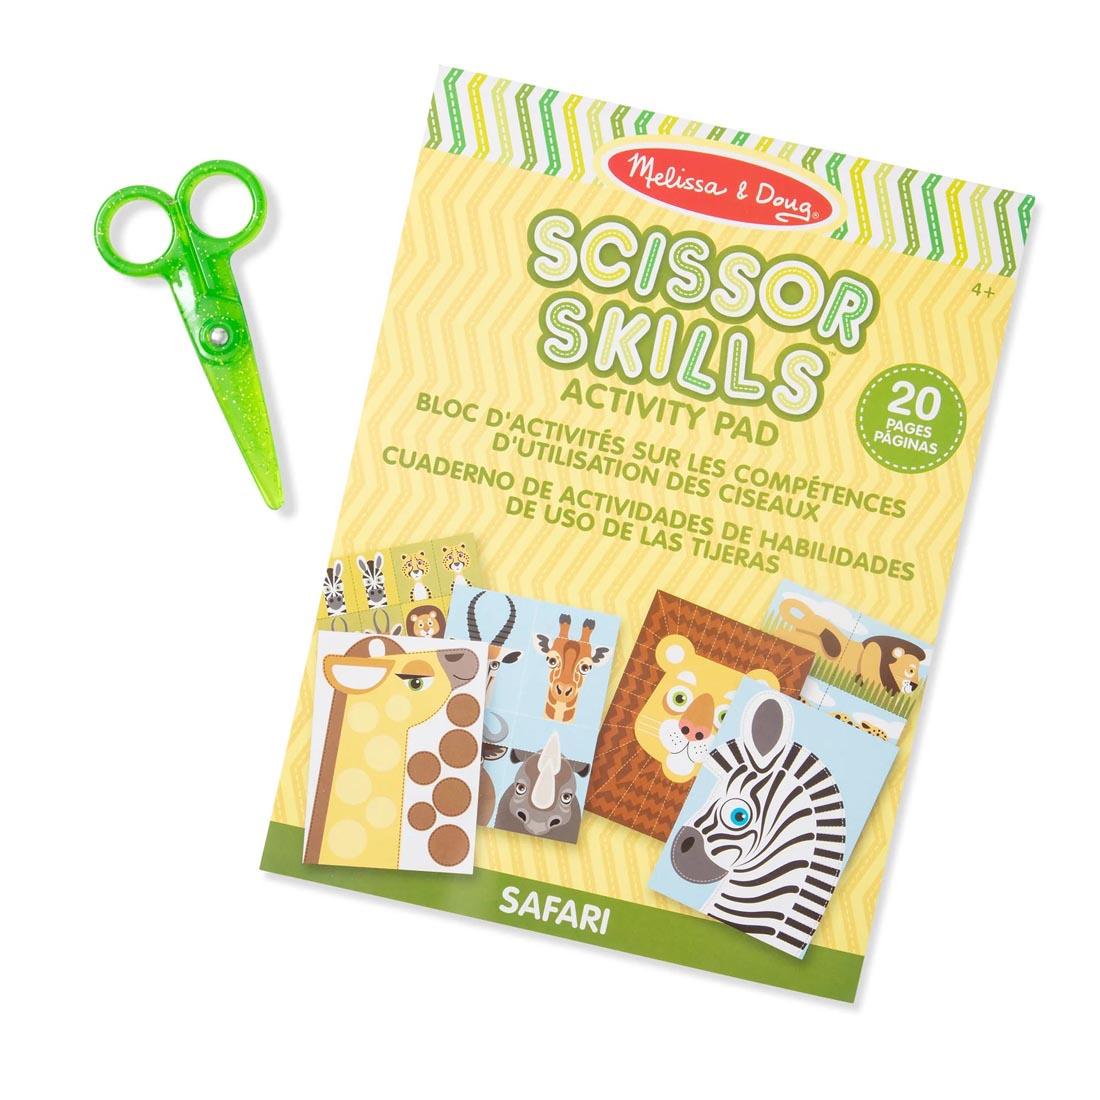 Safari Scissor Skills Activity Pad and Safety Scissors By Melissa & Doug